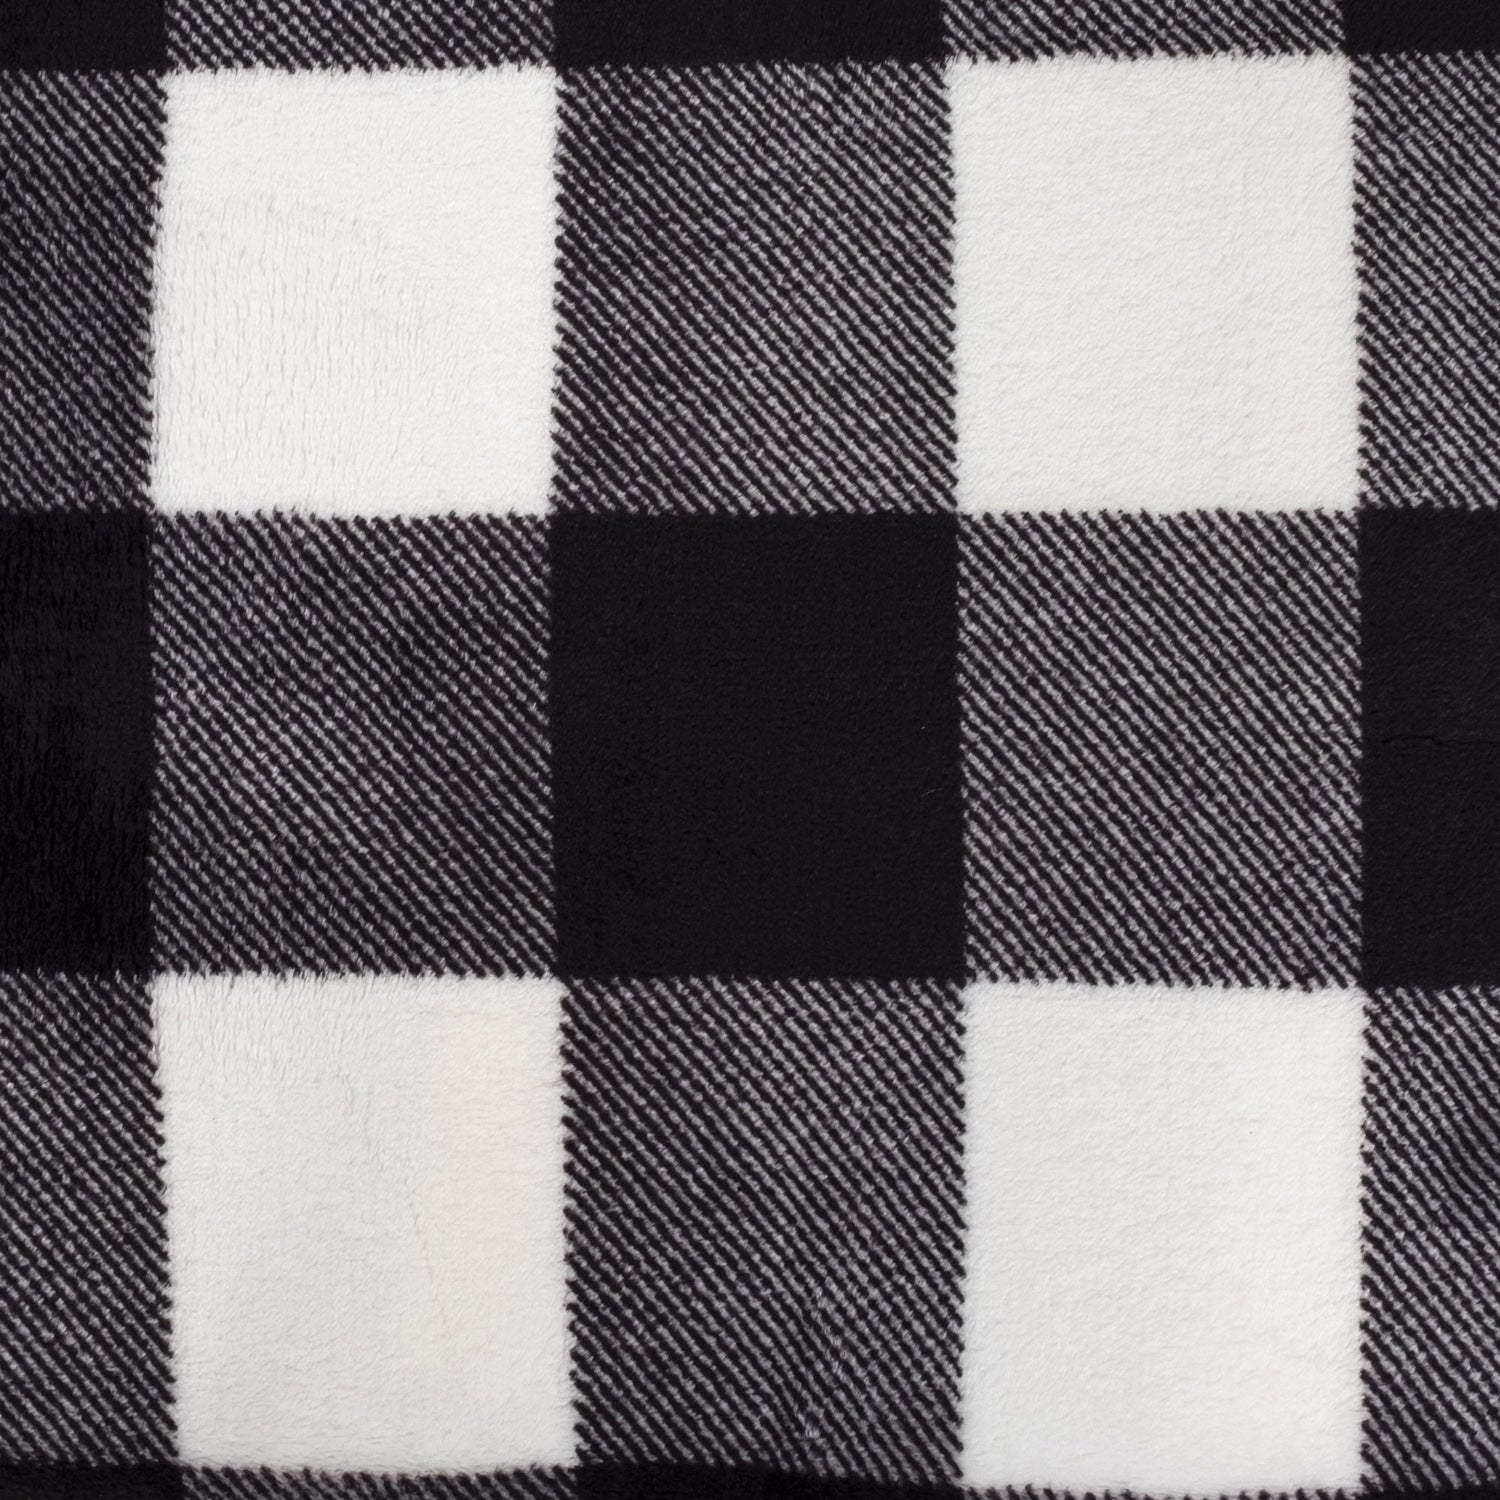 Buffalo Check Fleece Blanket Black White - Fabric 3